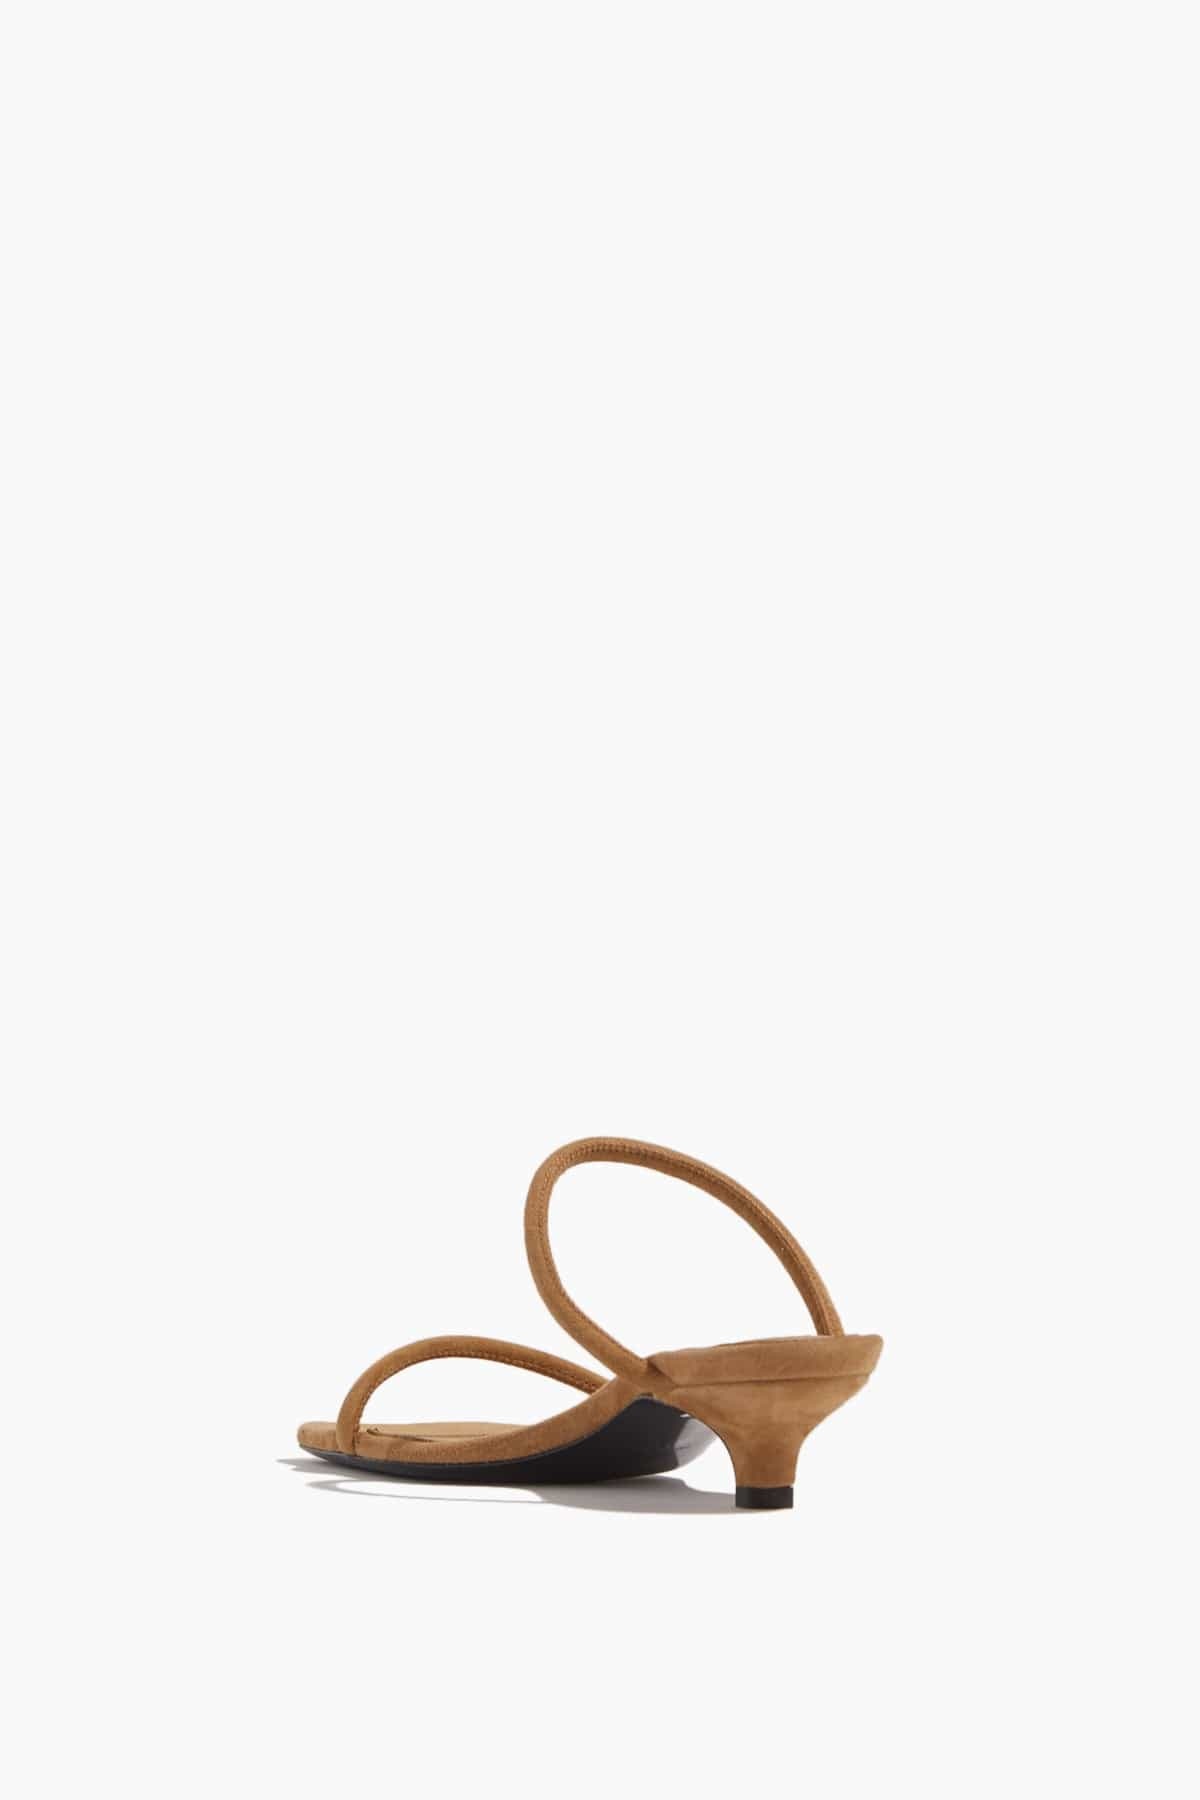 The Minimalist Sandal in Caramel - 2